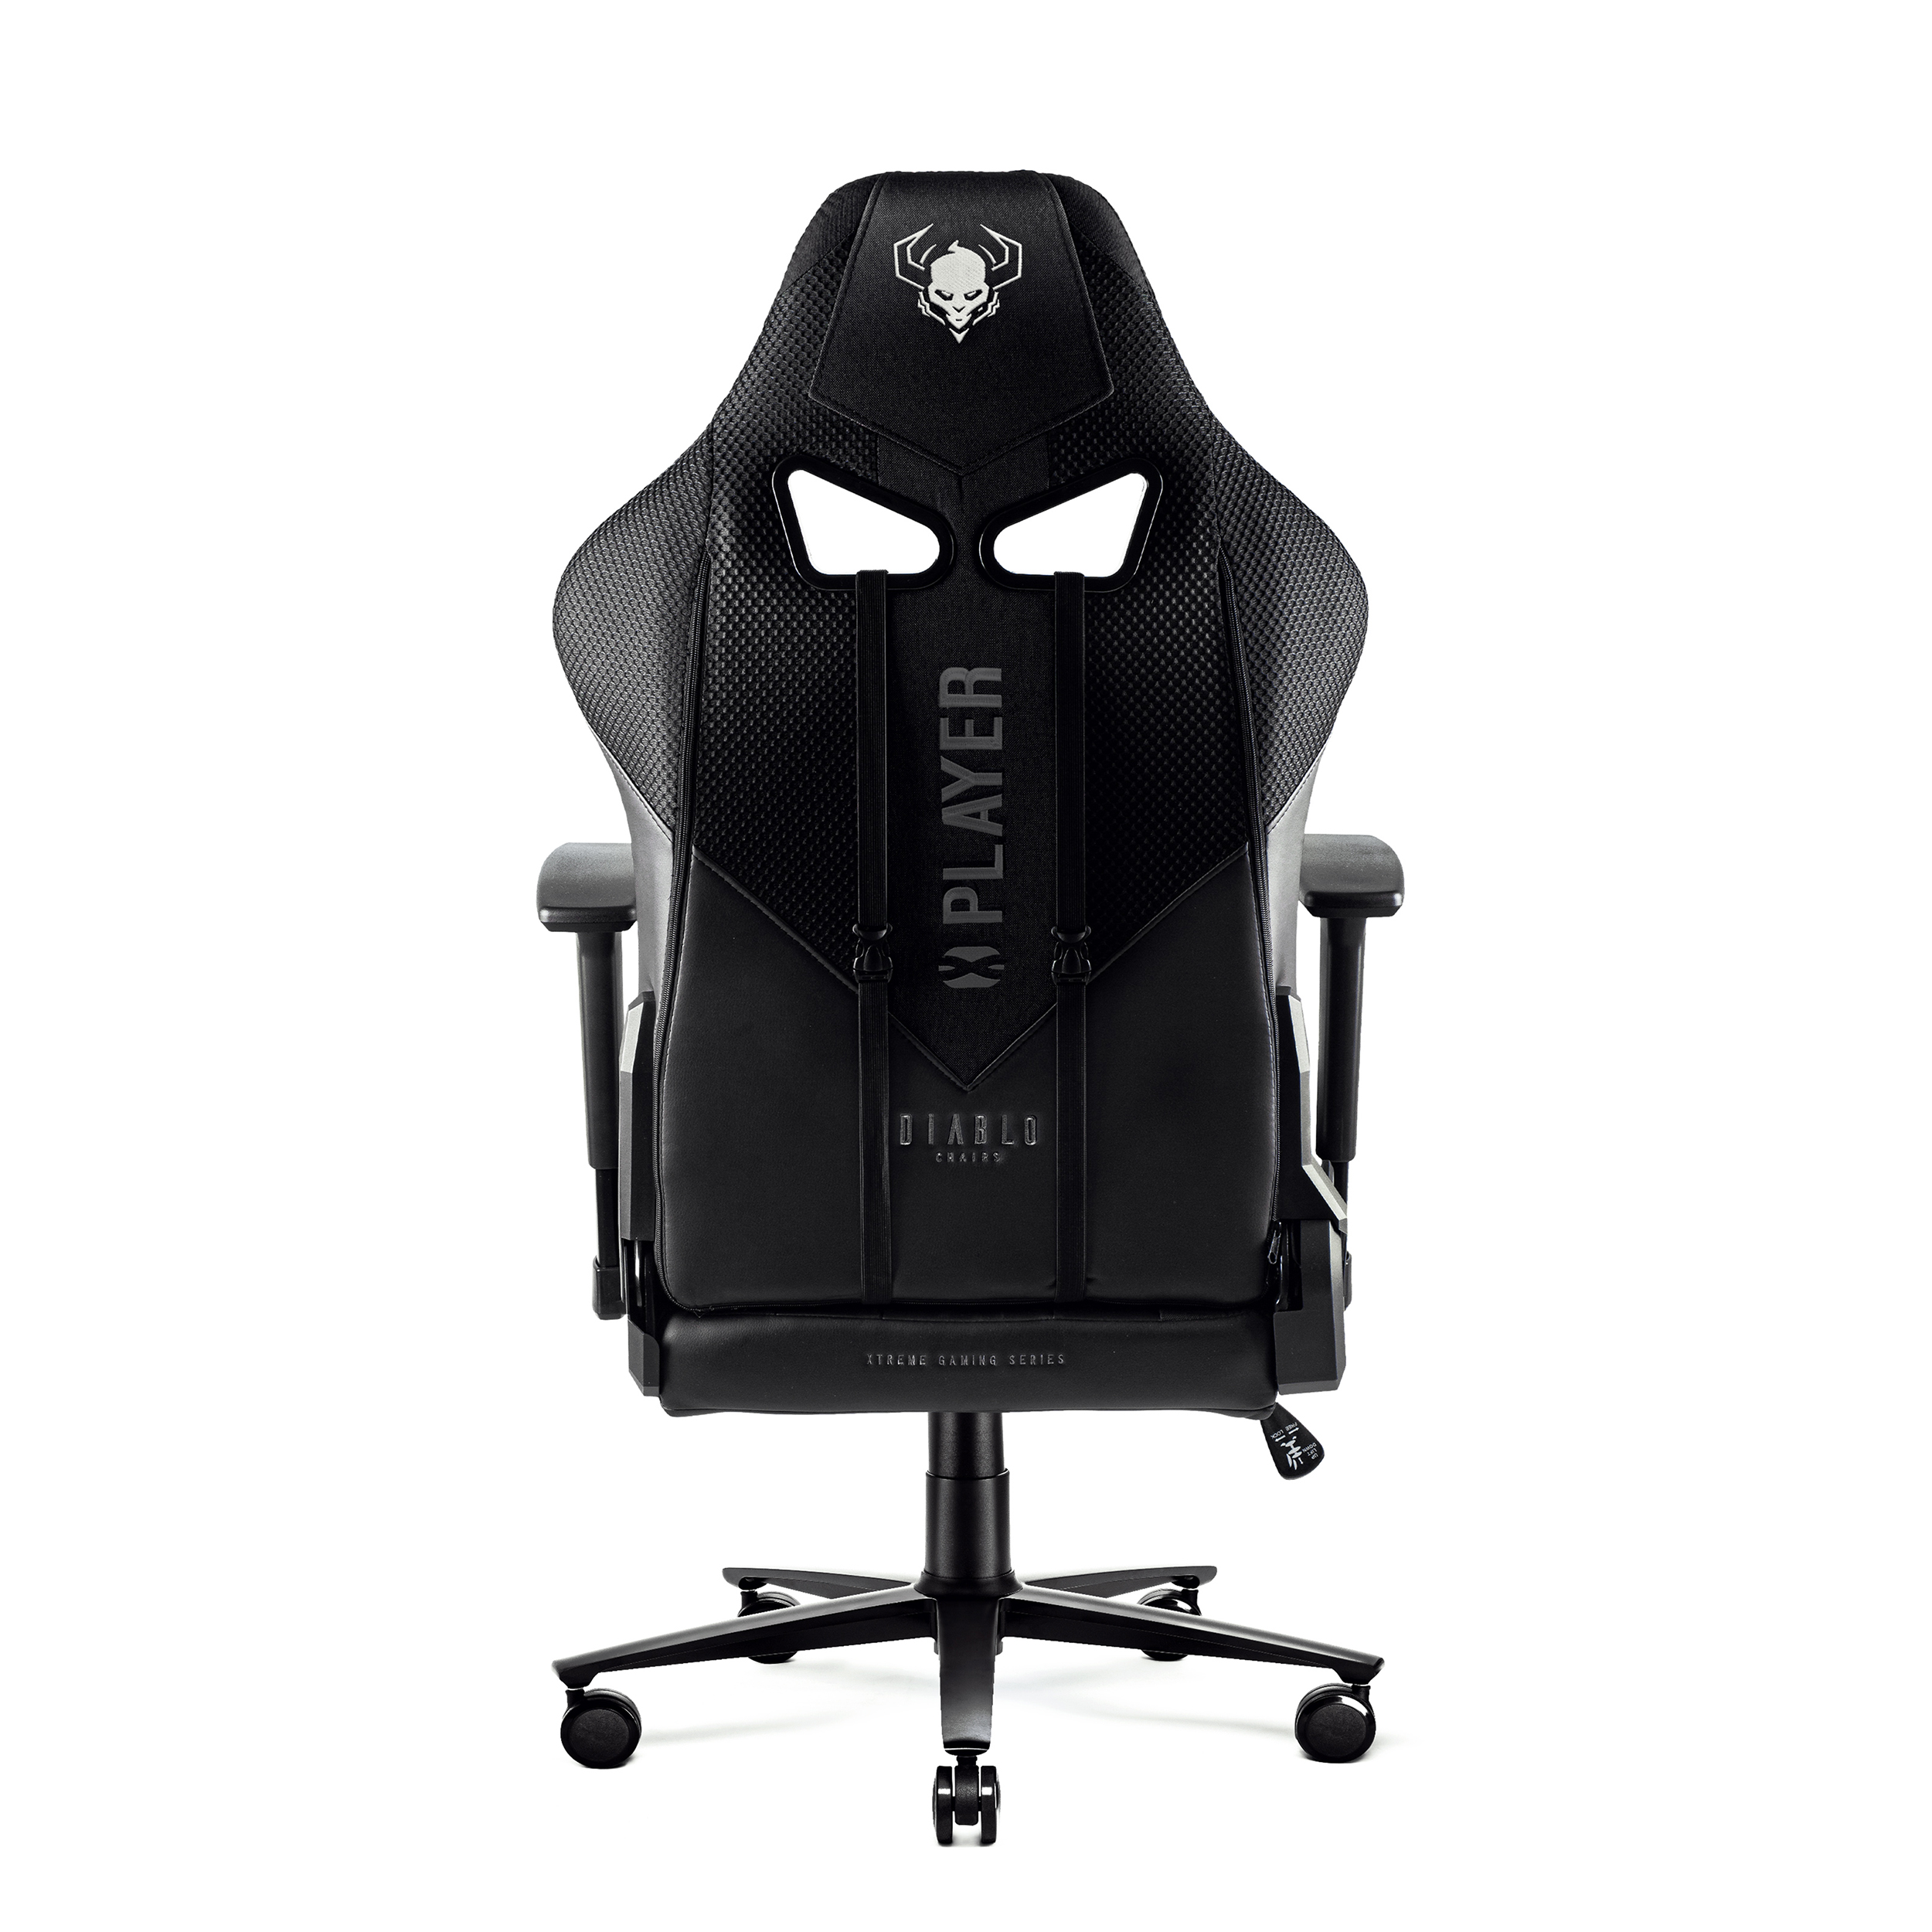 black Gaming CHAIRS DIABLO X-PLAYER NORMAL STUHL GAMING Chair, 2.0